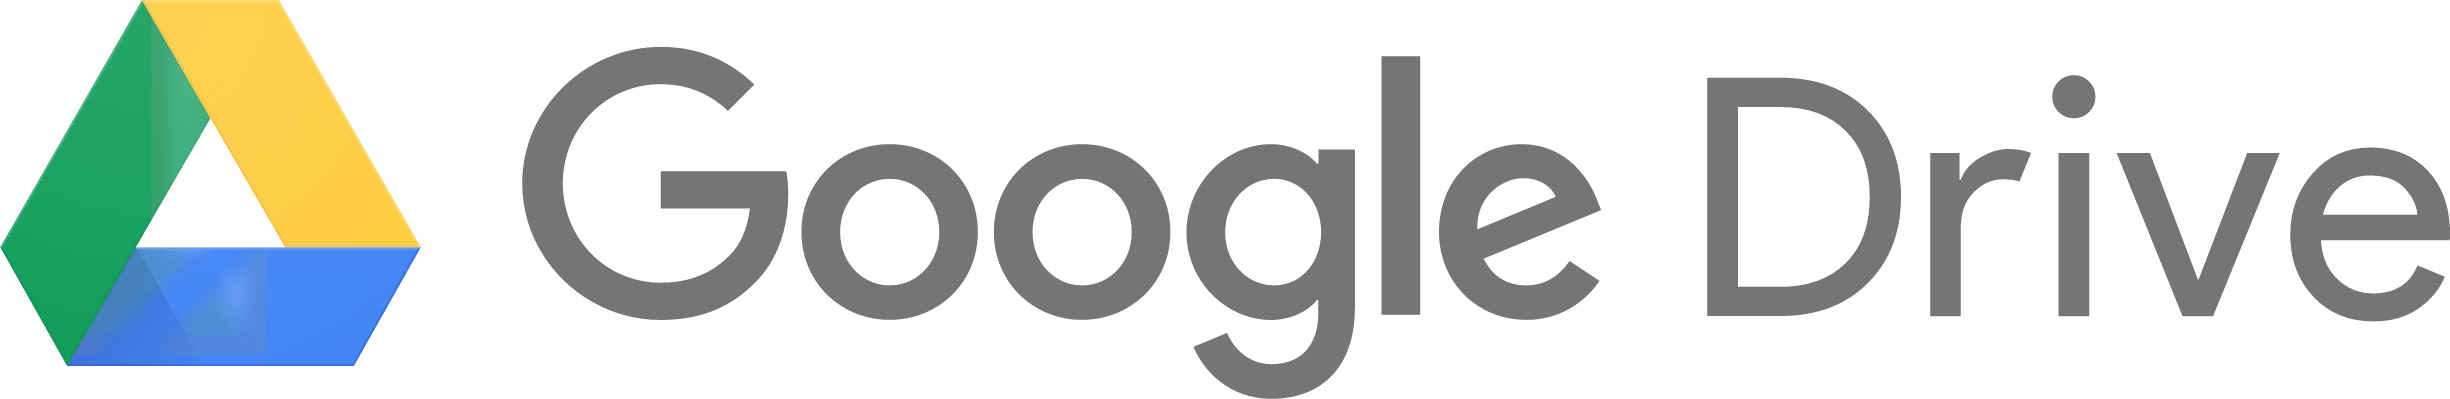 Google Drive のロゴ